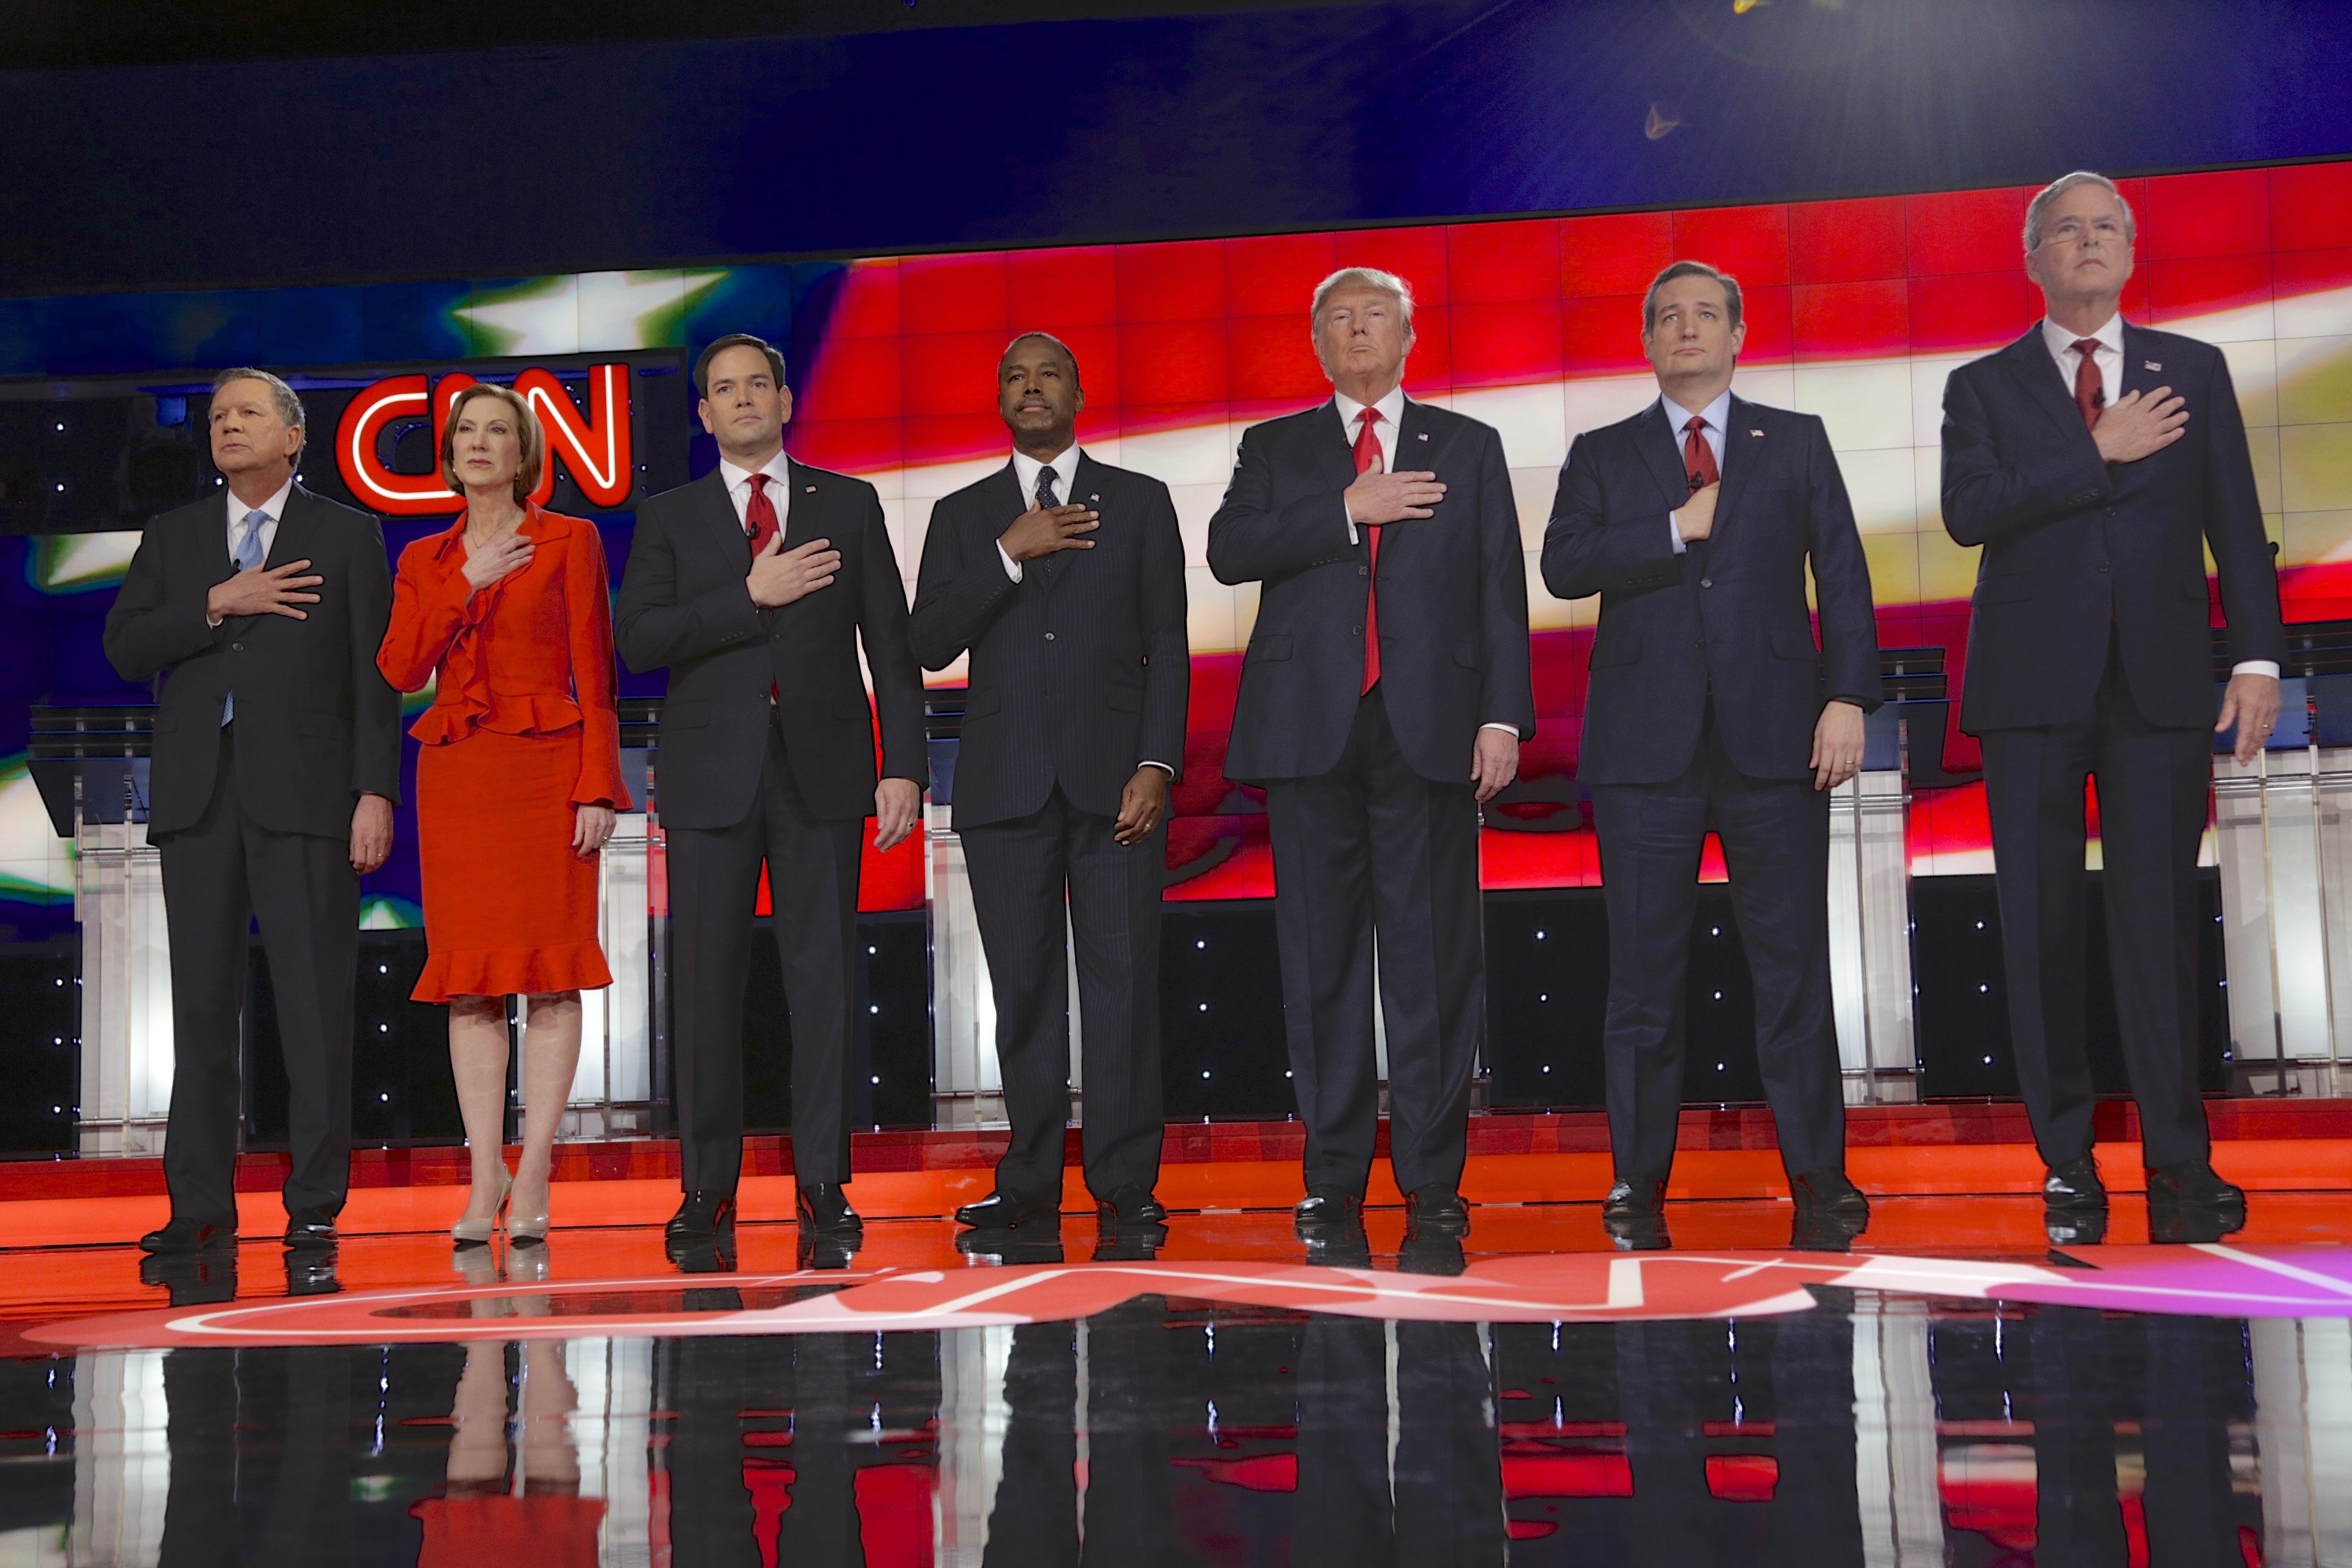 2015, CNN Republican presidential debate. (Joseph Sohm/Shutterstock)